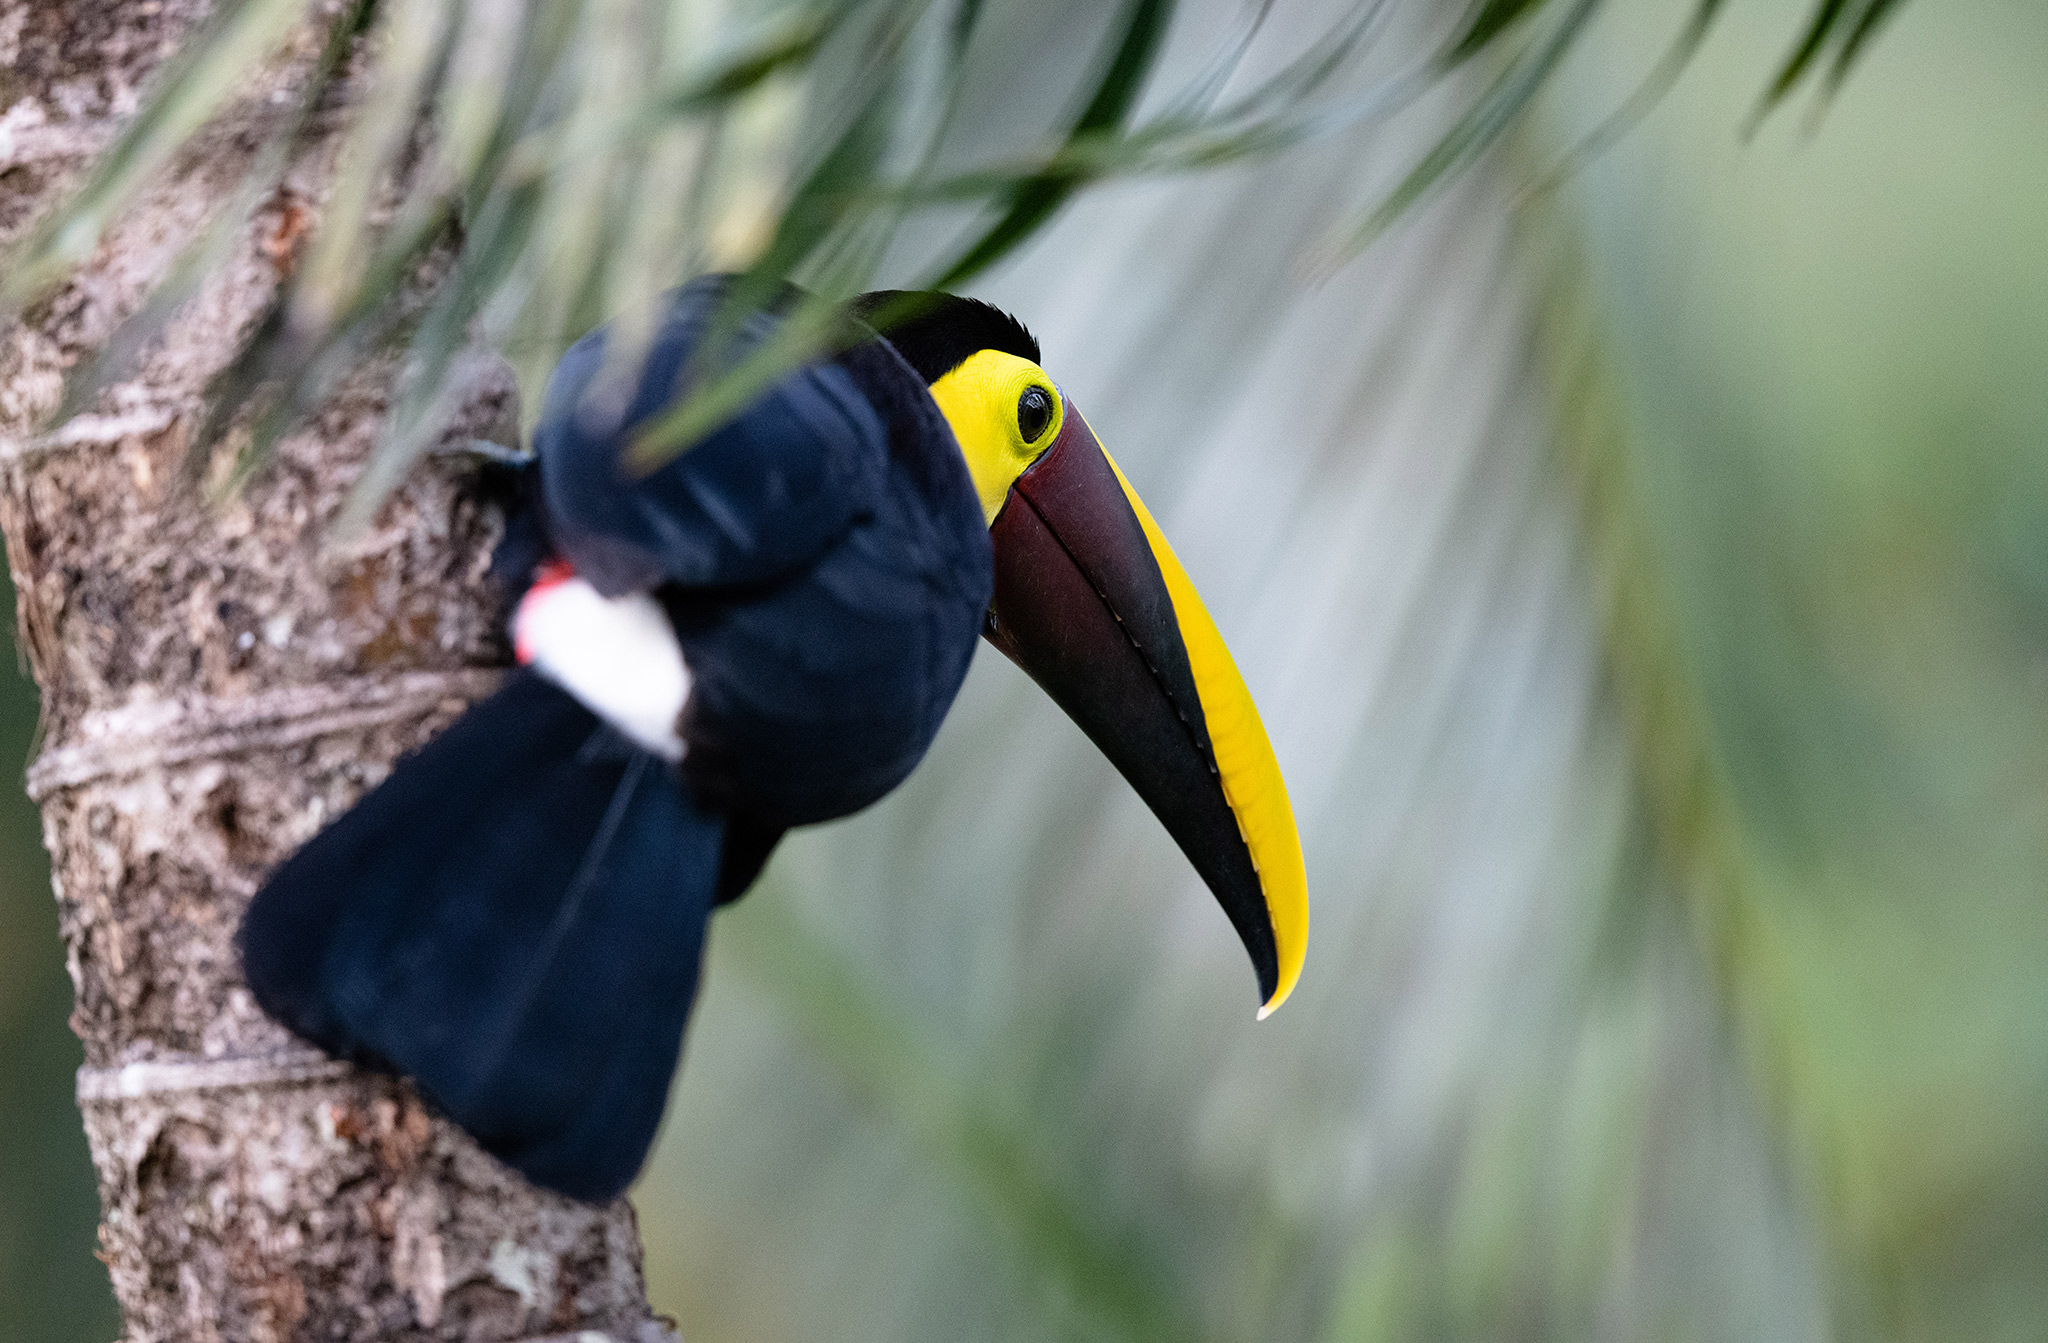 Toucan tocard
(Ramphastos ambiguus) - Yellow-throated Toucan